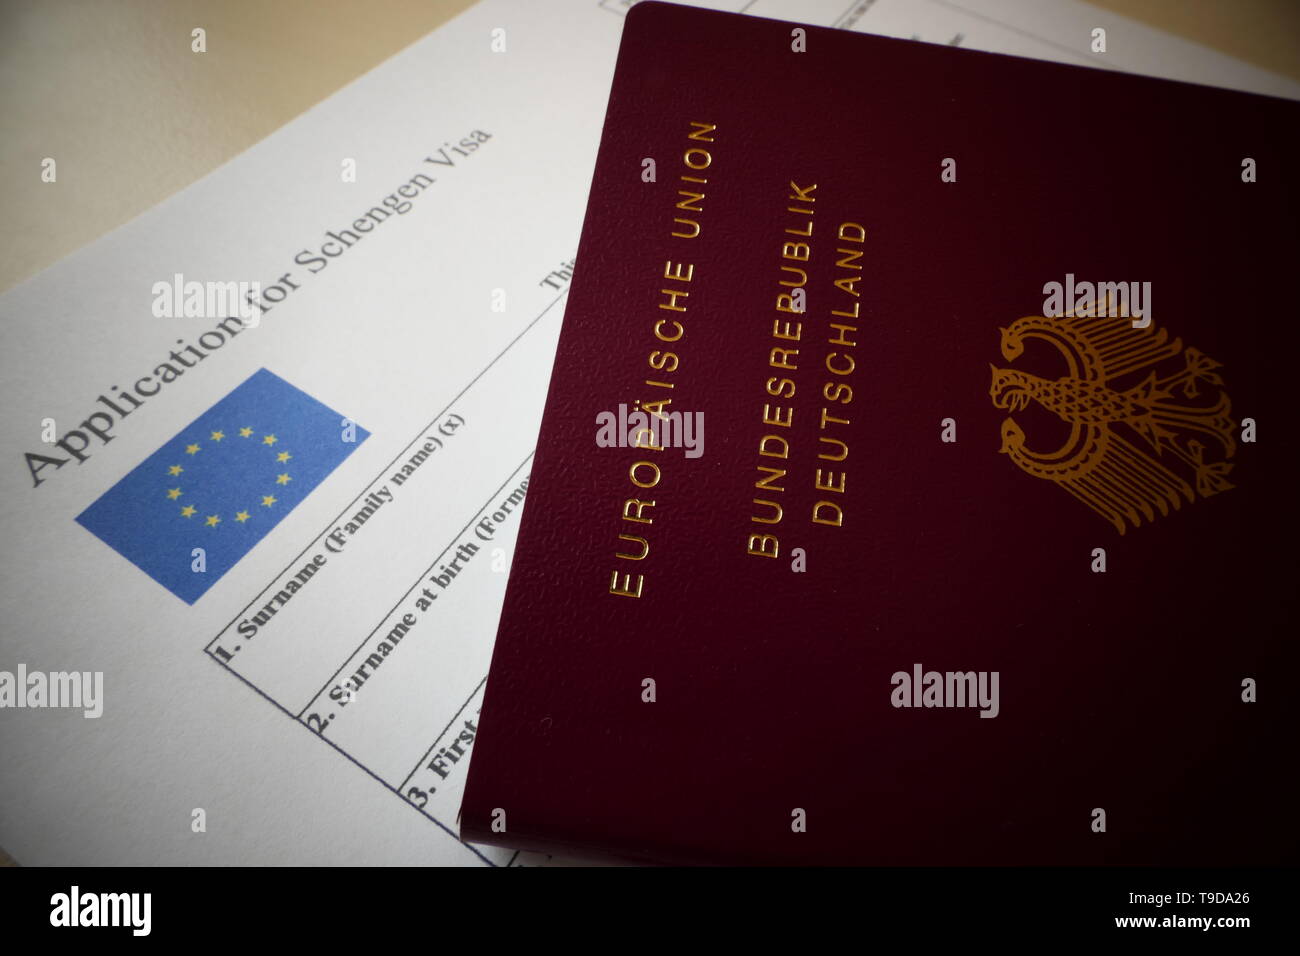 schengen transit visa application form